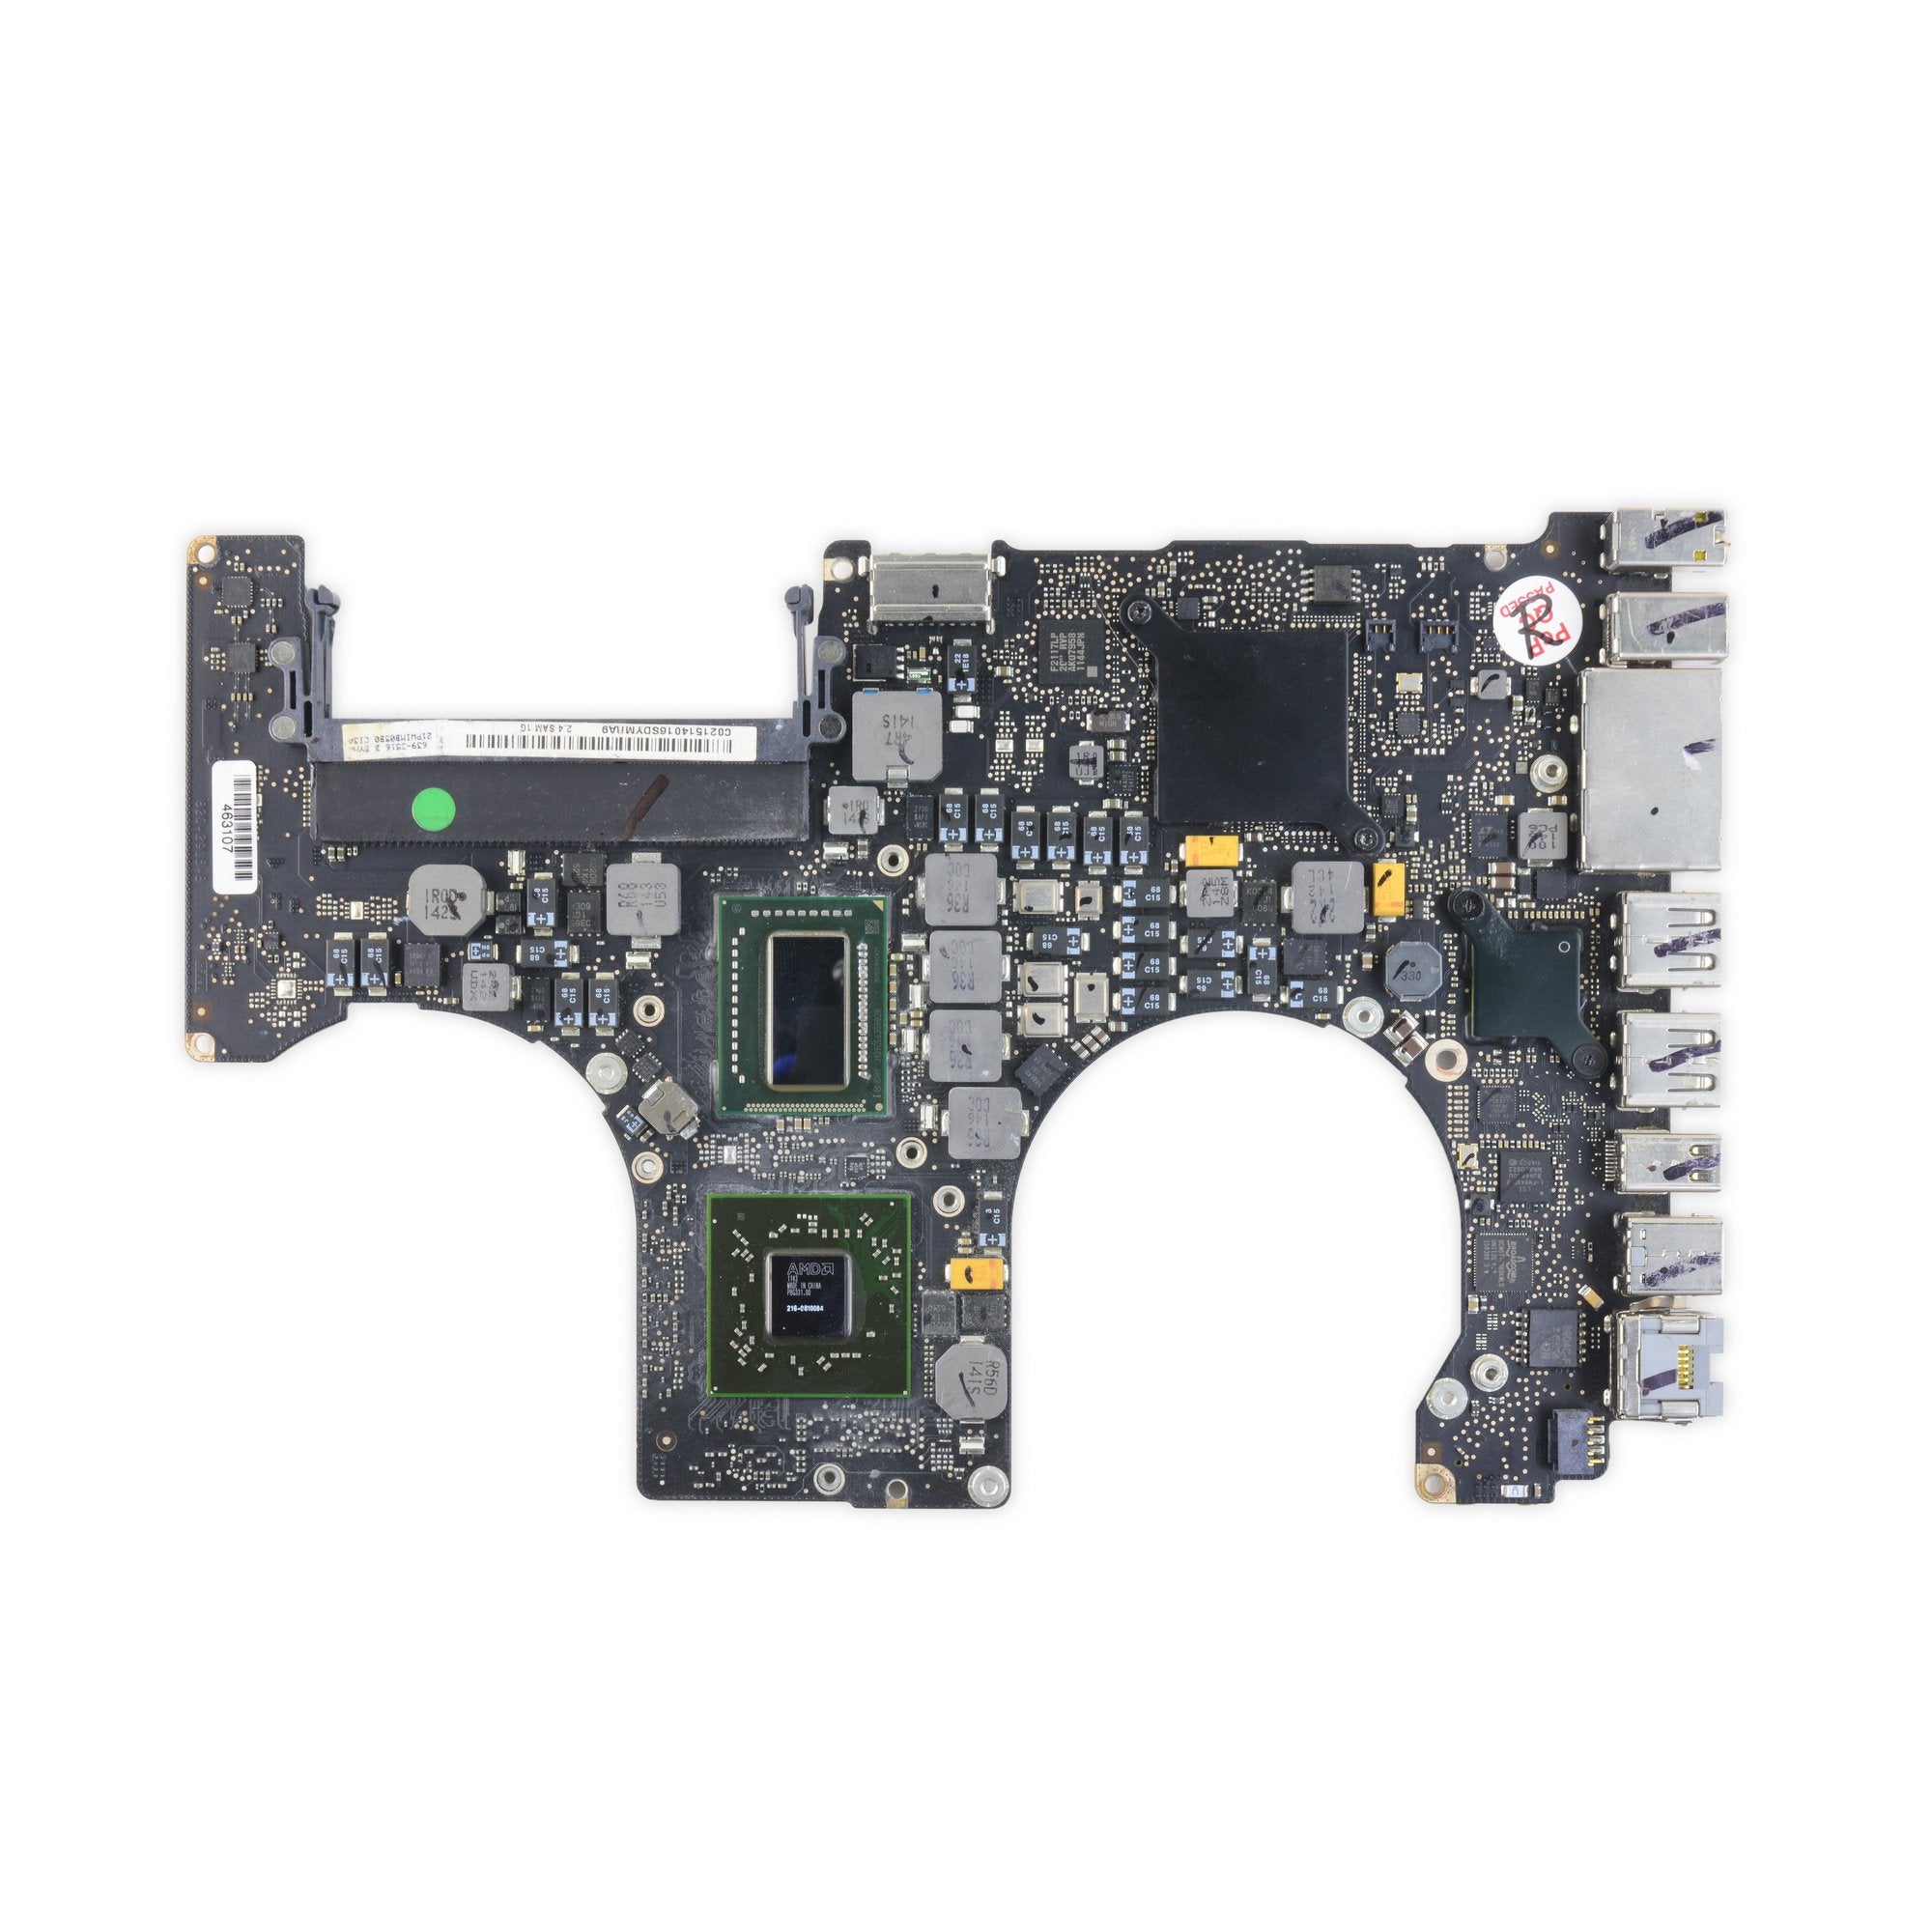 MacBook Pro 15" Unibody (Late 2011) 2.4 GHz Logic Board Used